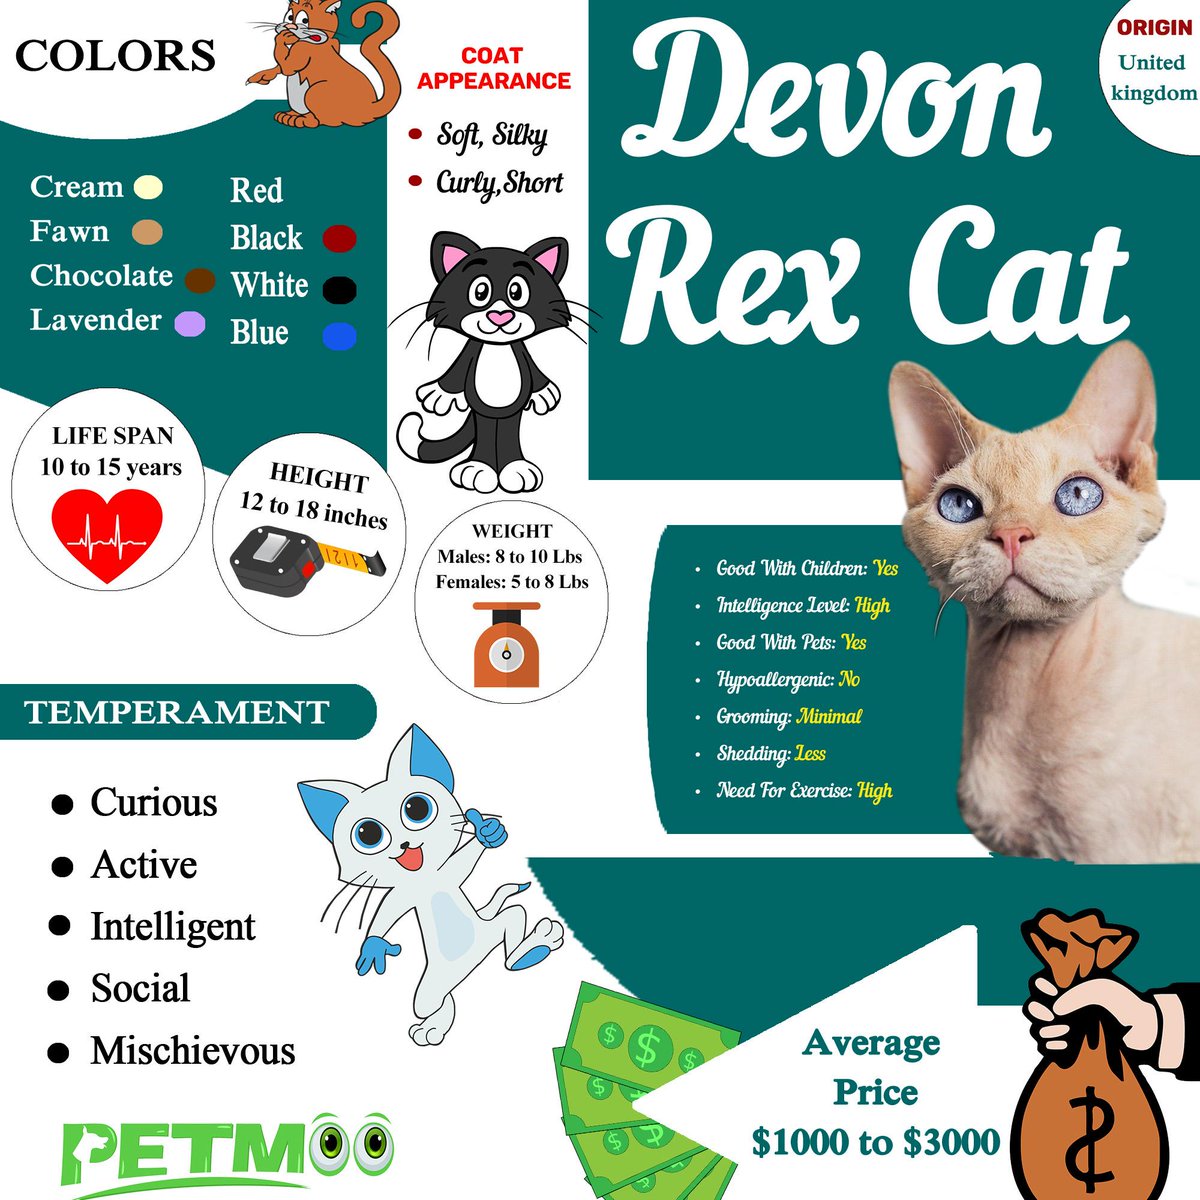 Devon Rex Cat Infographic
#petmoo #pets #cats #catbreeds #devonrexcatinfographic